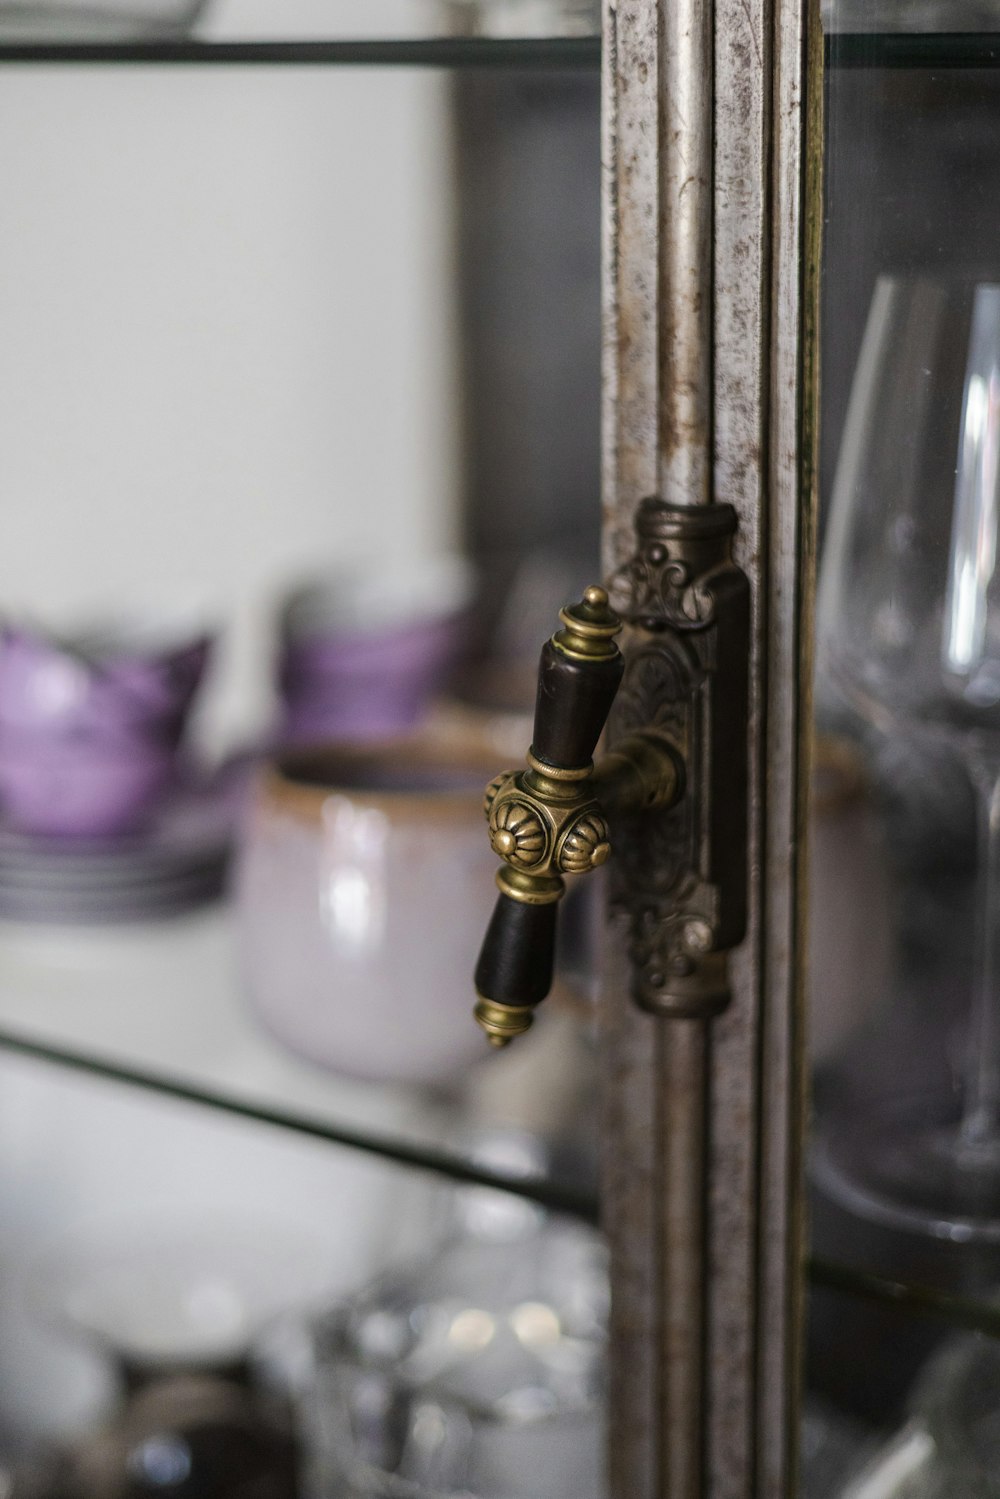 a close up of a door handle on a glass shelf